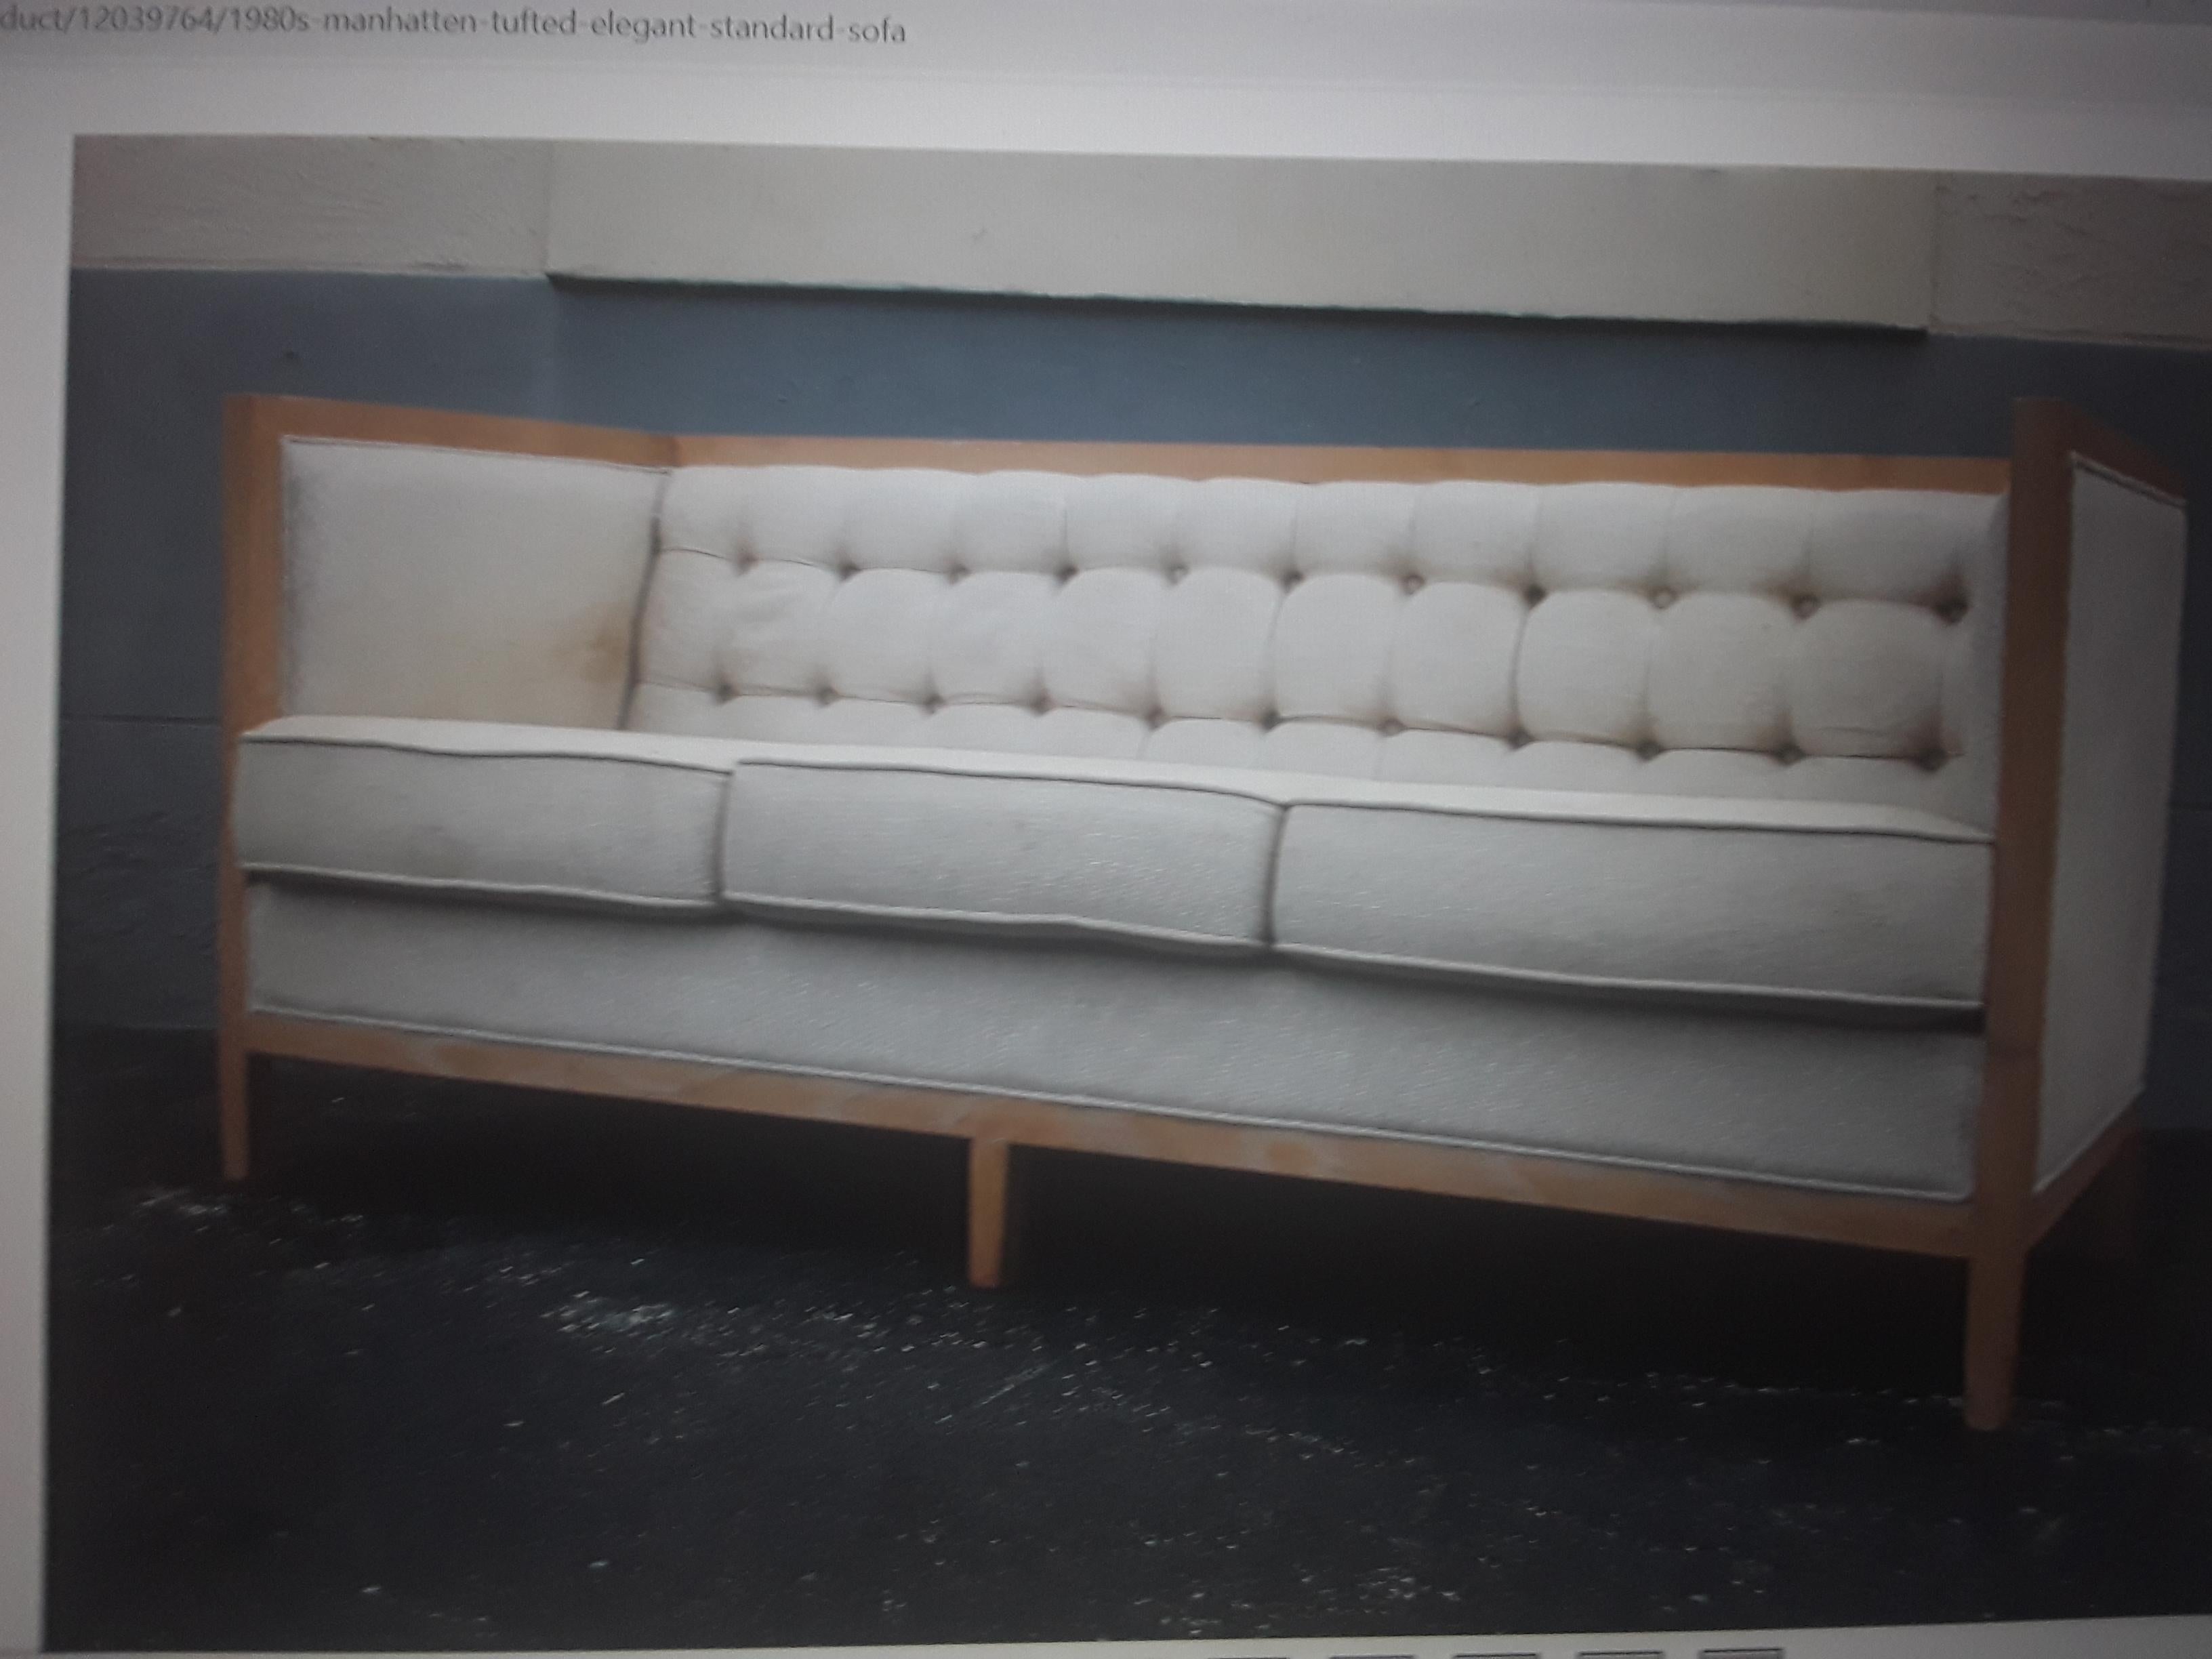 1980's Modern Manhattan Elegant Tufted Standard Sofa For Sale 11